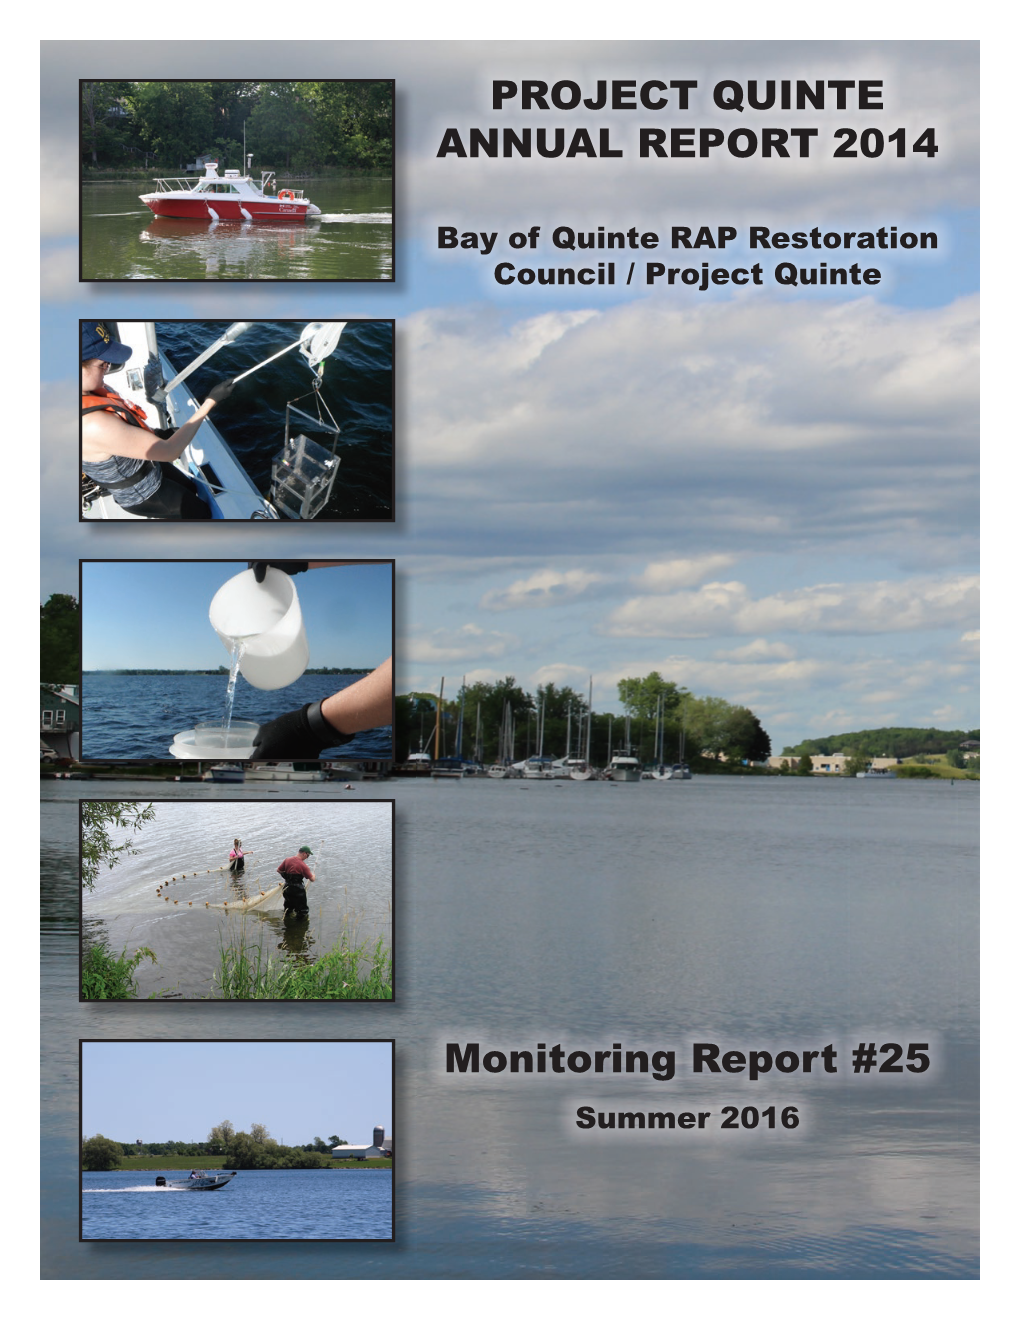 PROJECT QUINTE ANNUAL REPORT 2014 Monitoring Report